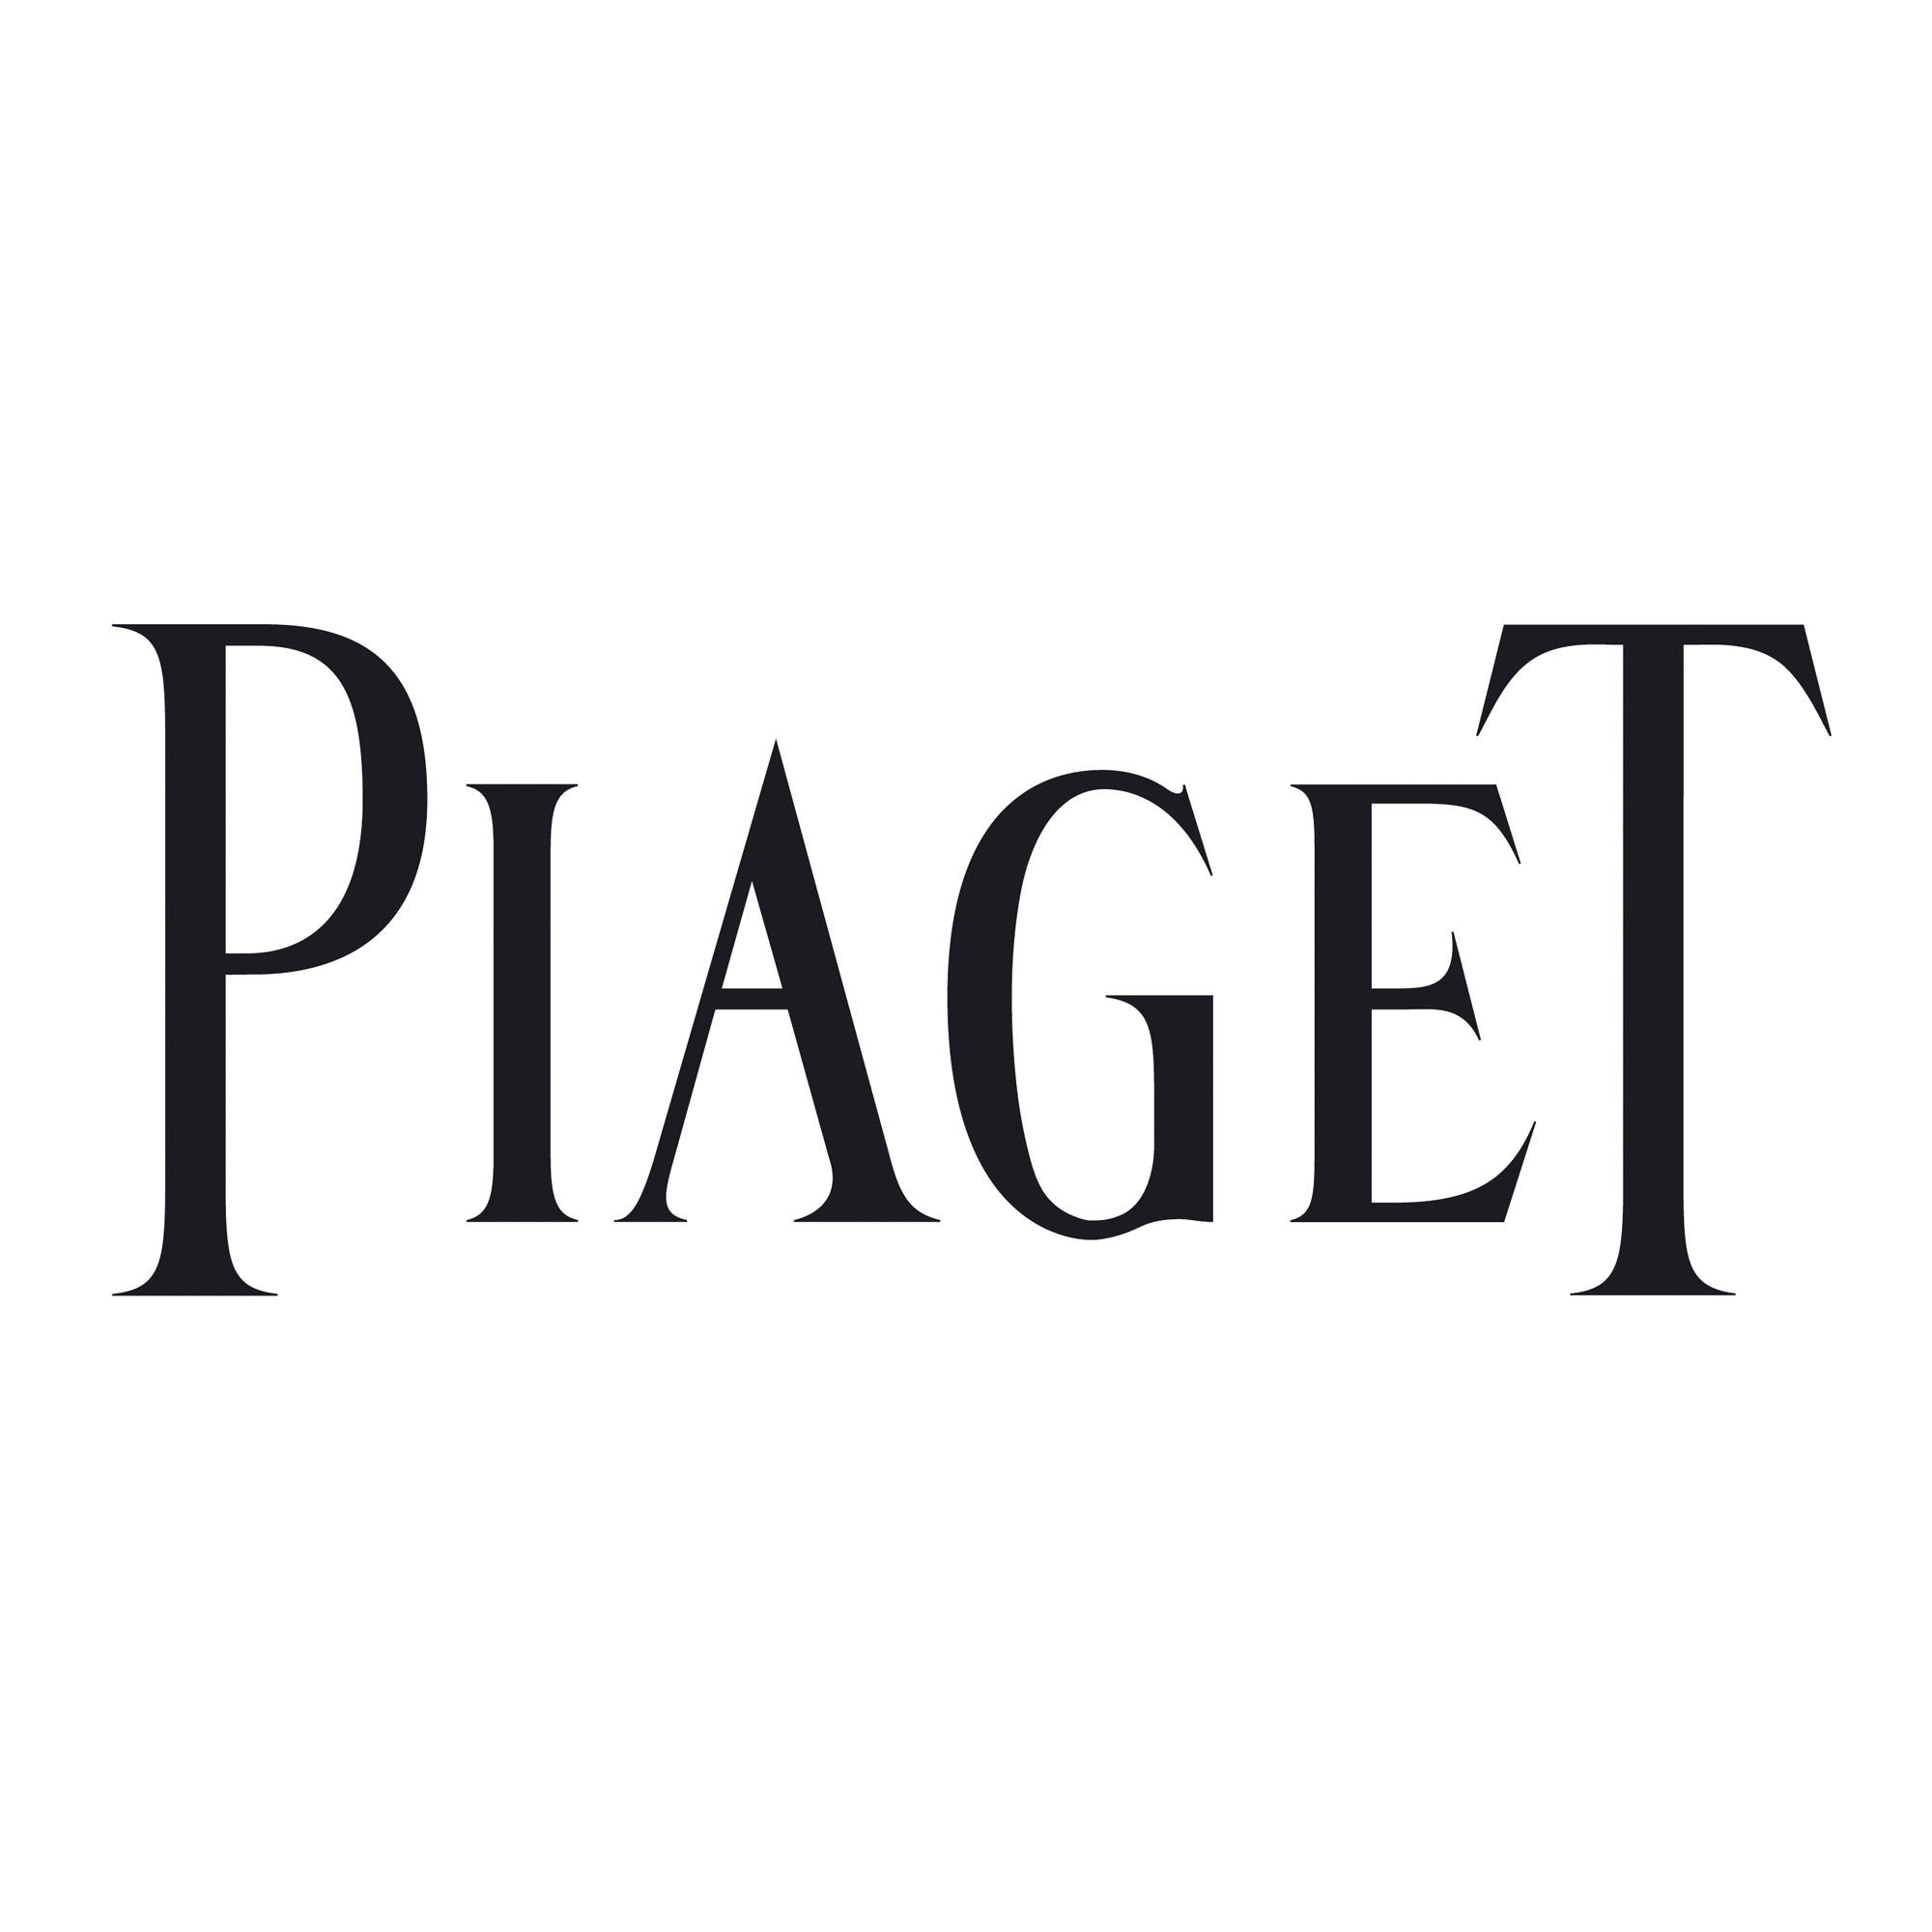 Piaget Boutique Melbourne - Chadstone Logo